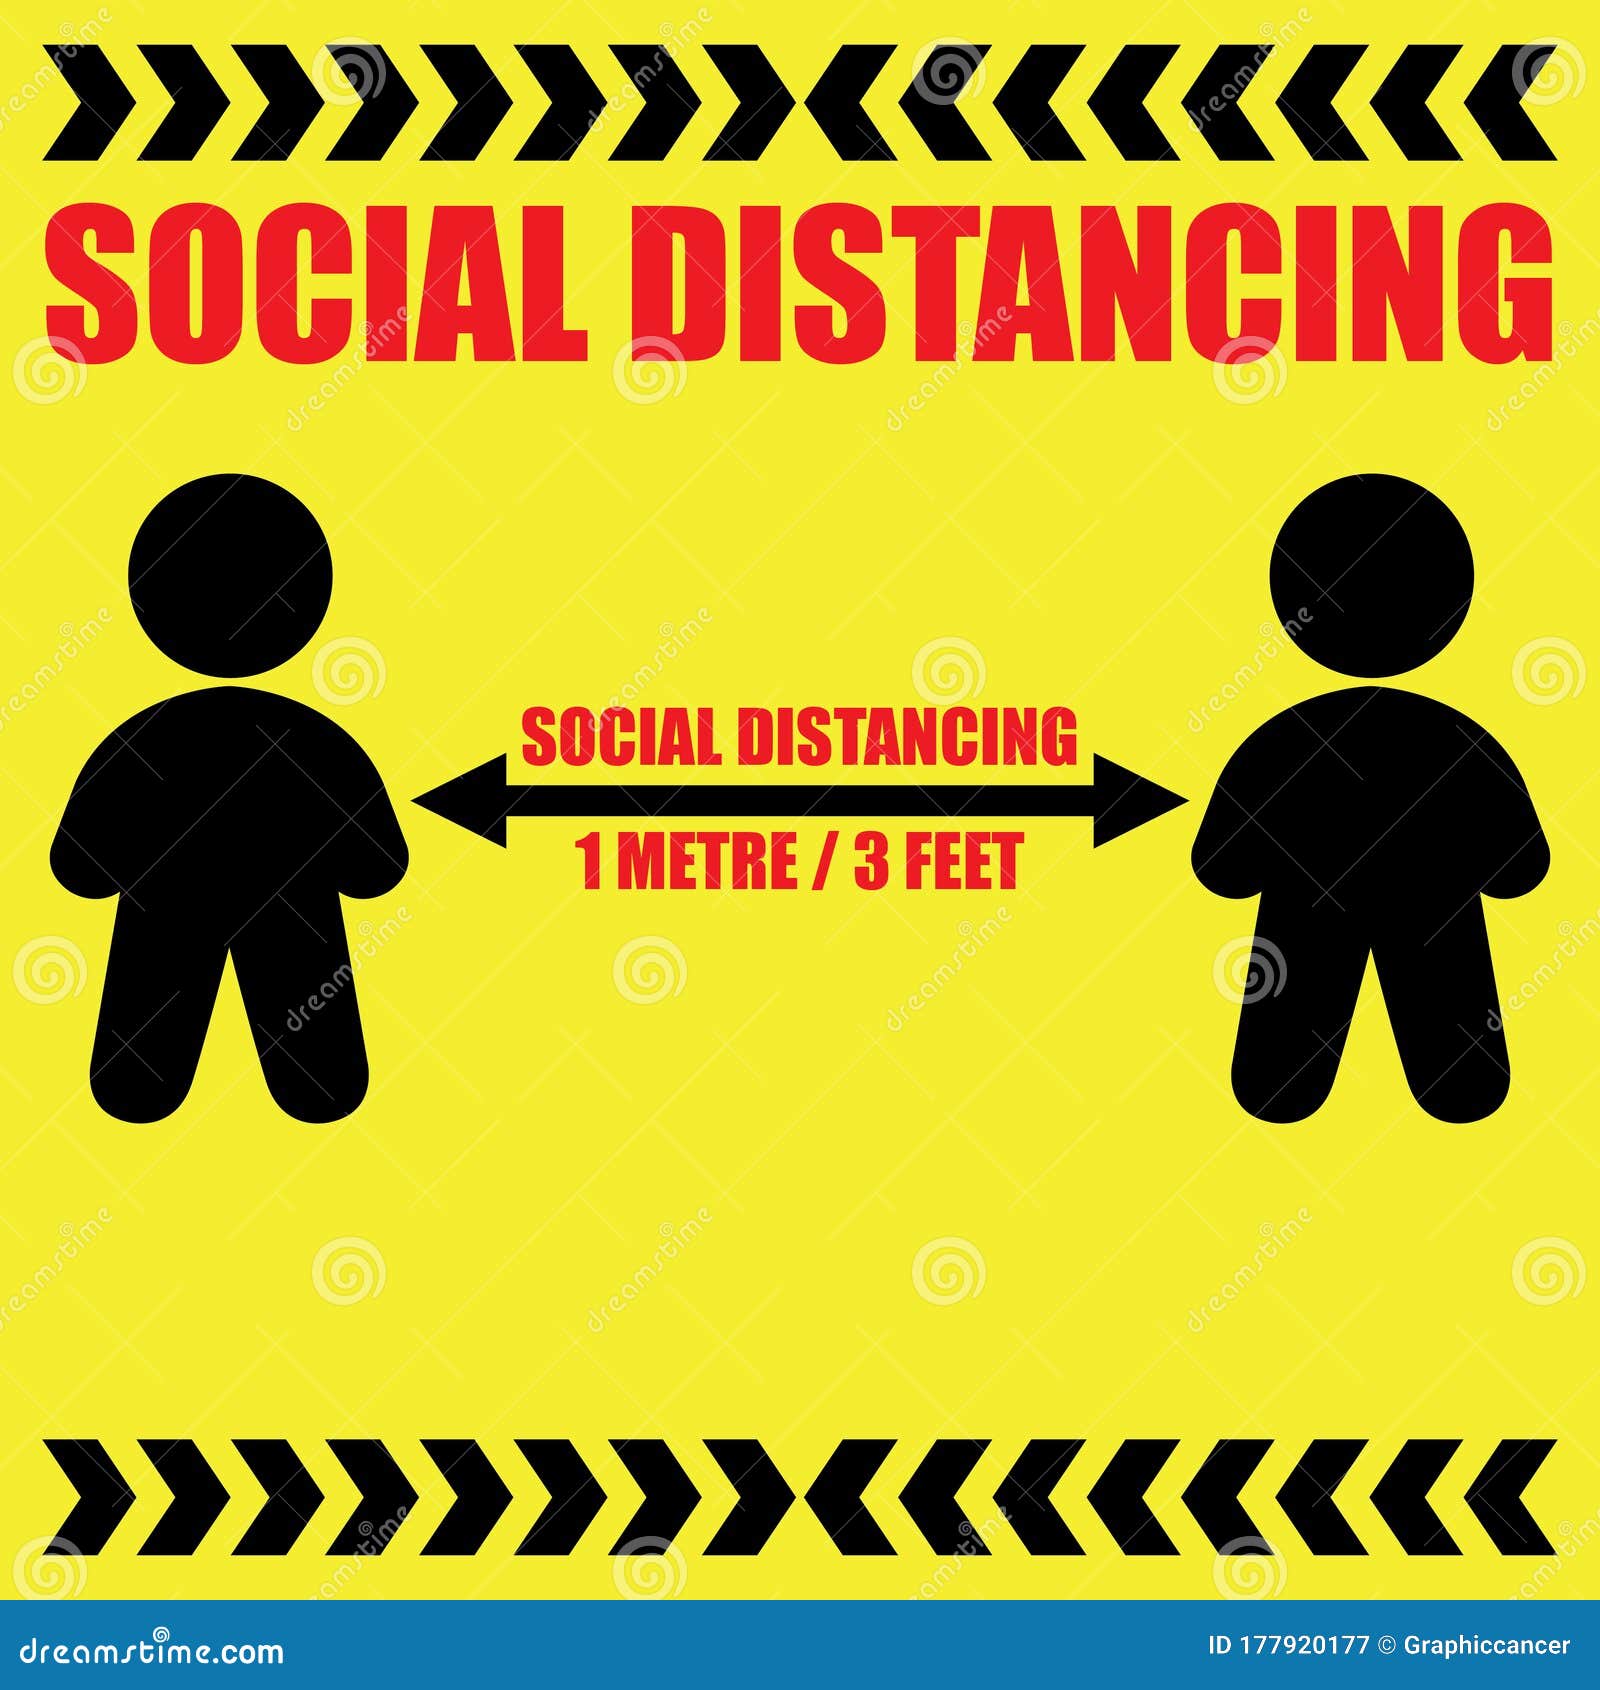 social distancing keep your distance 1 metre